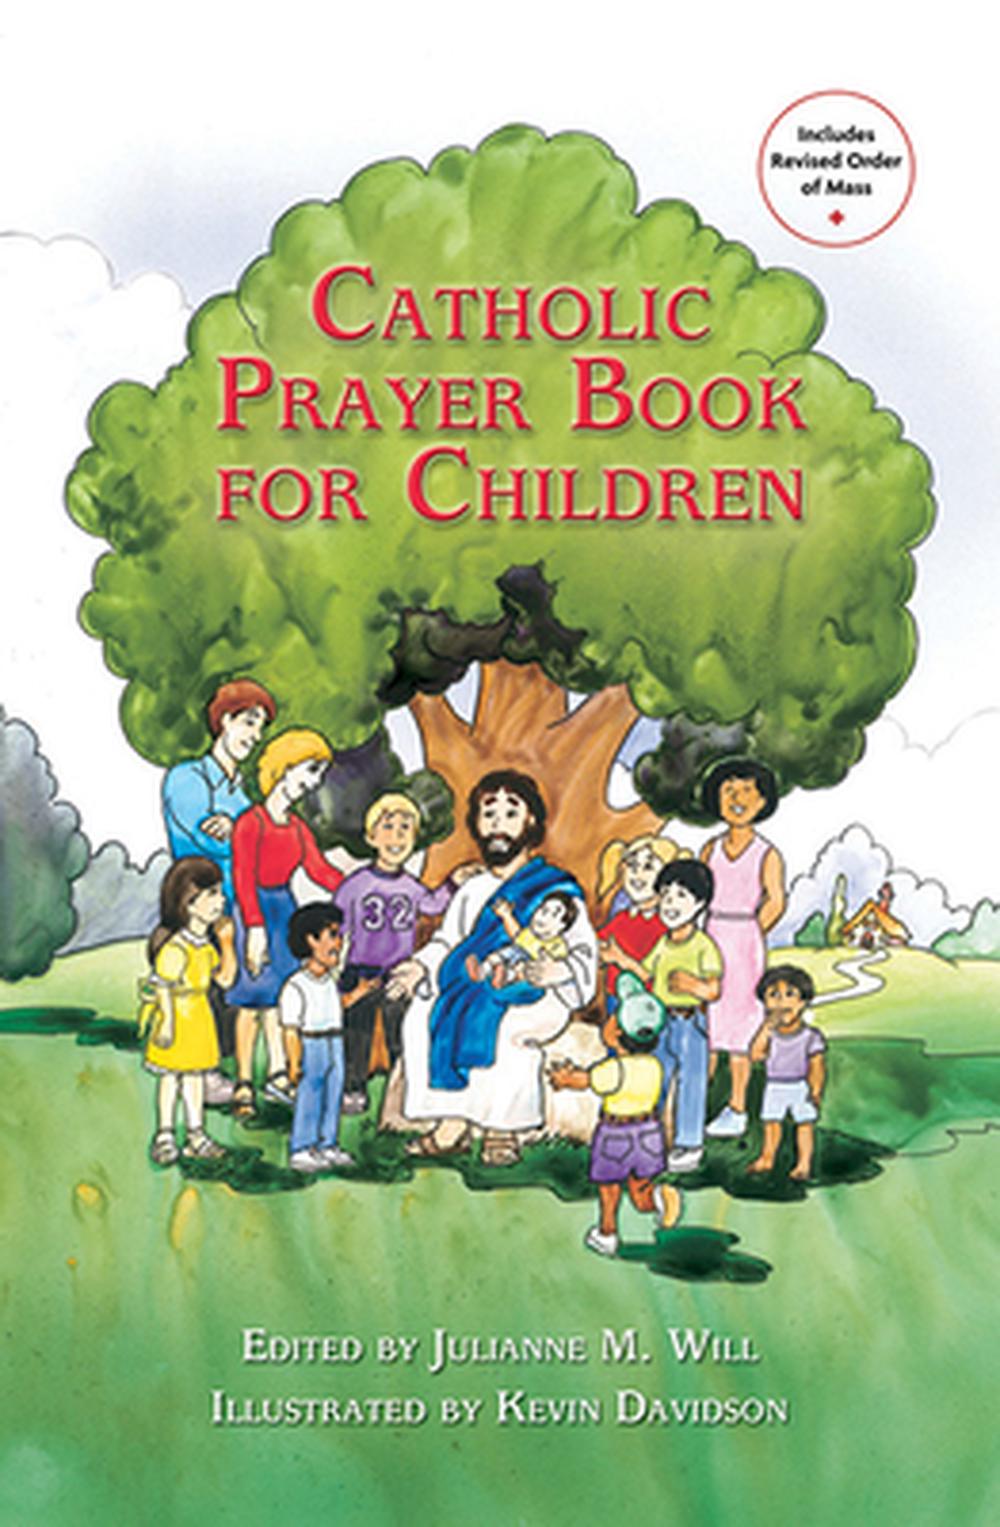 catholic-prayer-book-for-children-by-julianne-m-will-english